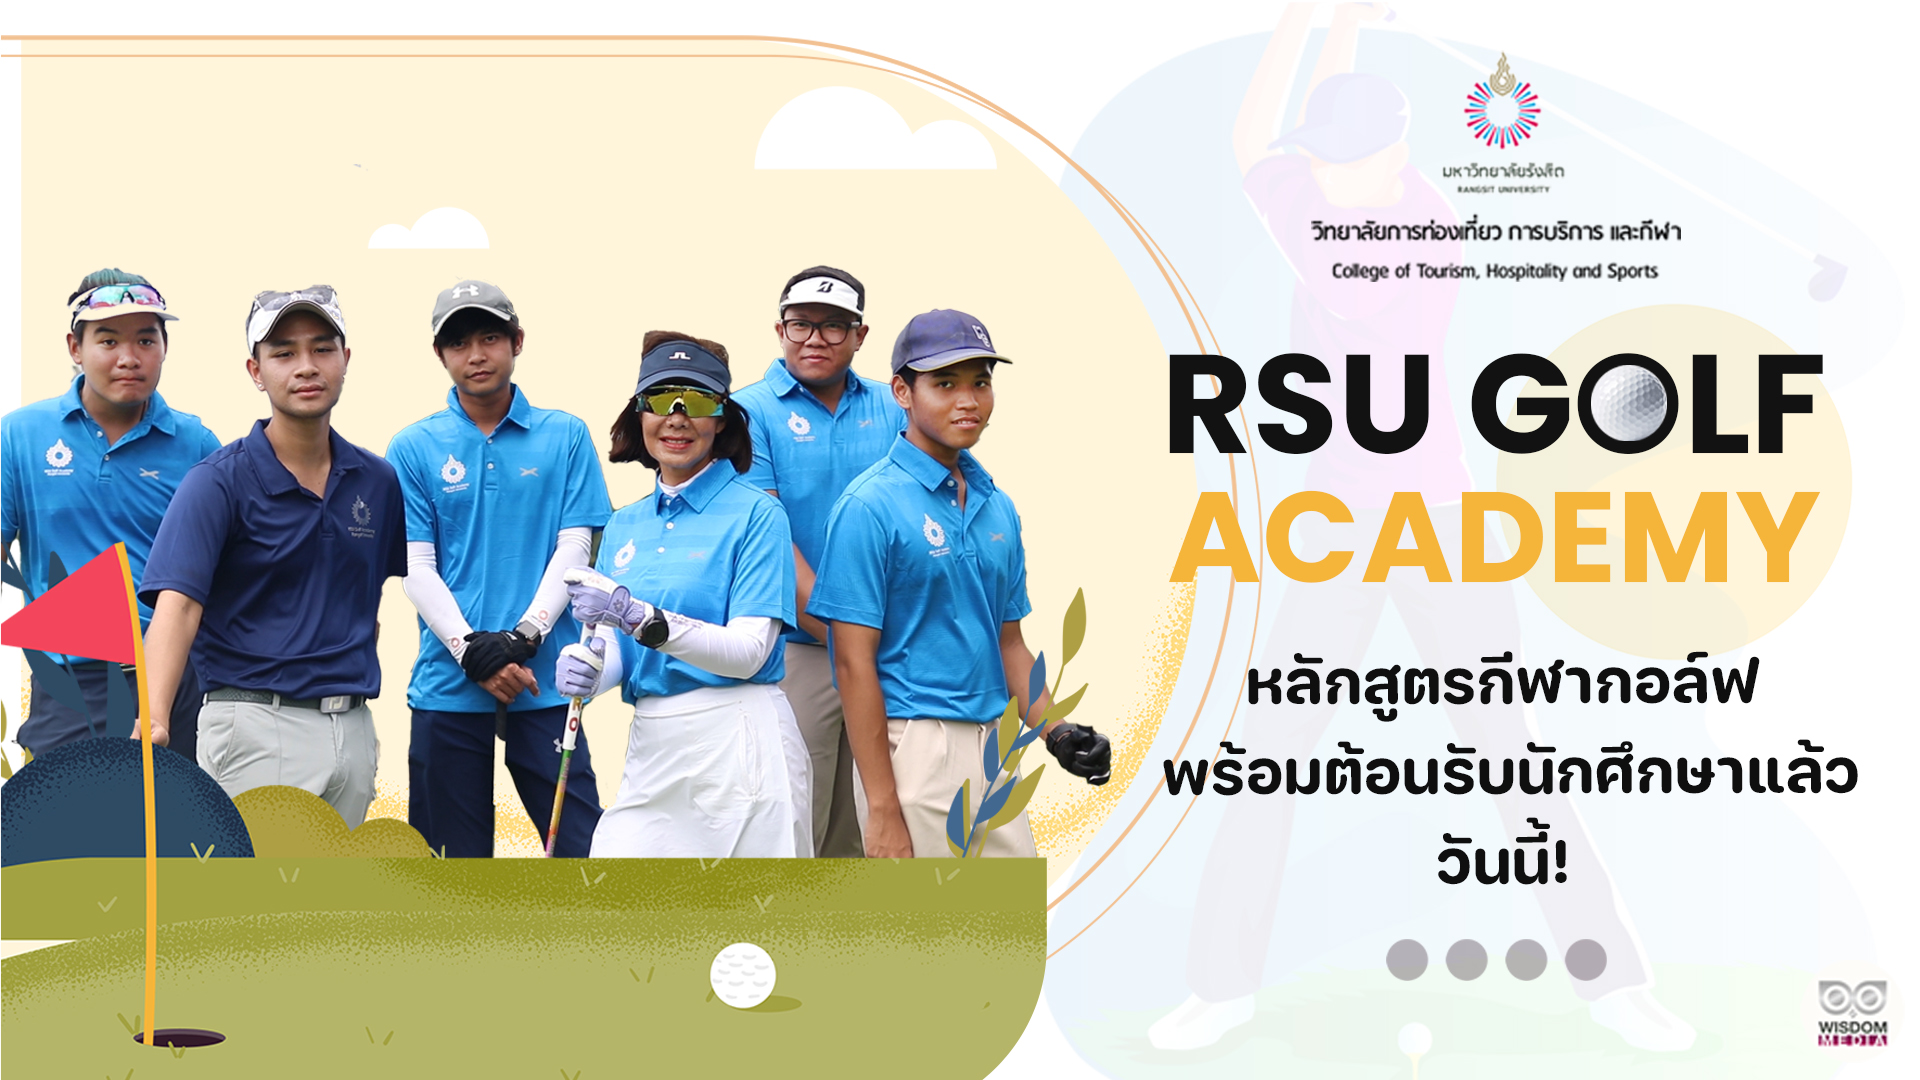 RSU GOLF ACADEMY หลักสูตรกีฬากอล์ฟ พร้อมต้อนรับนักศึกษาแล้ว วันนี้!